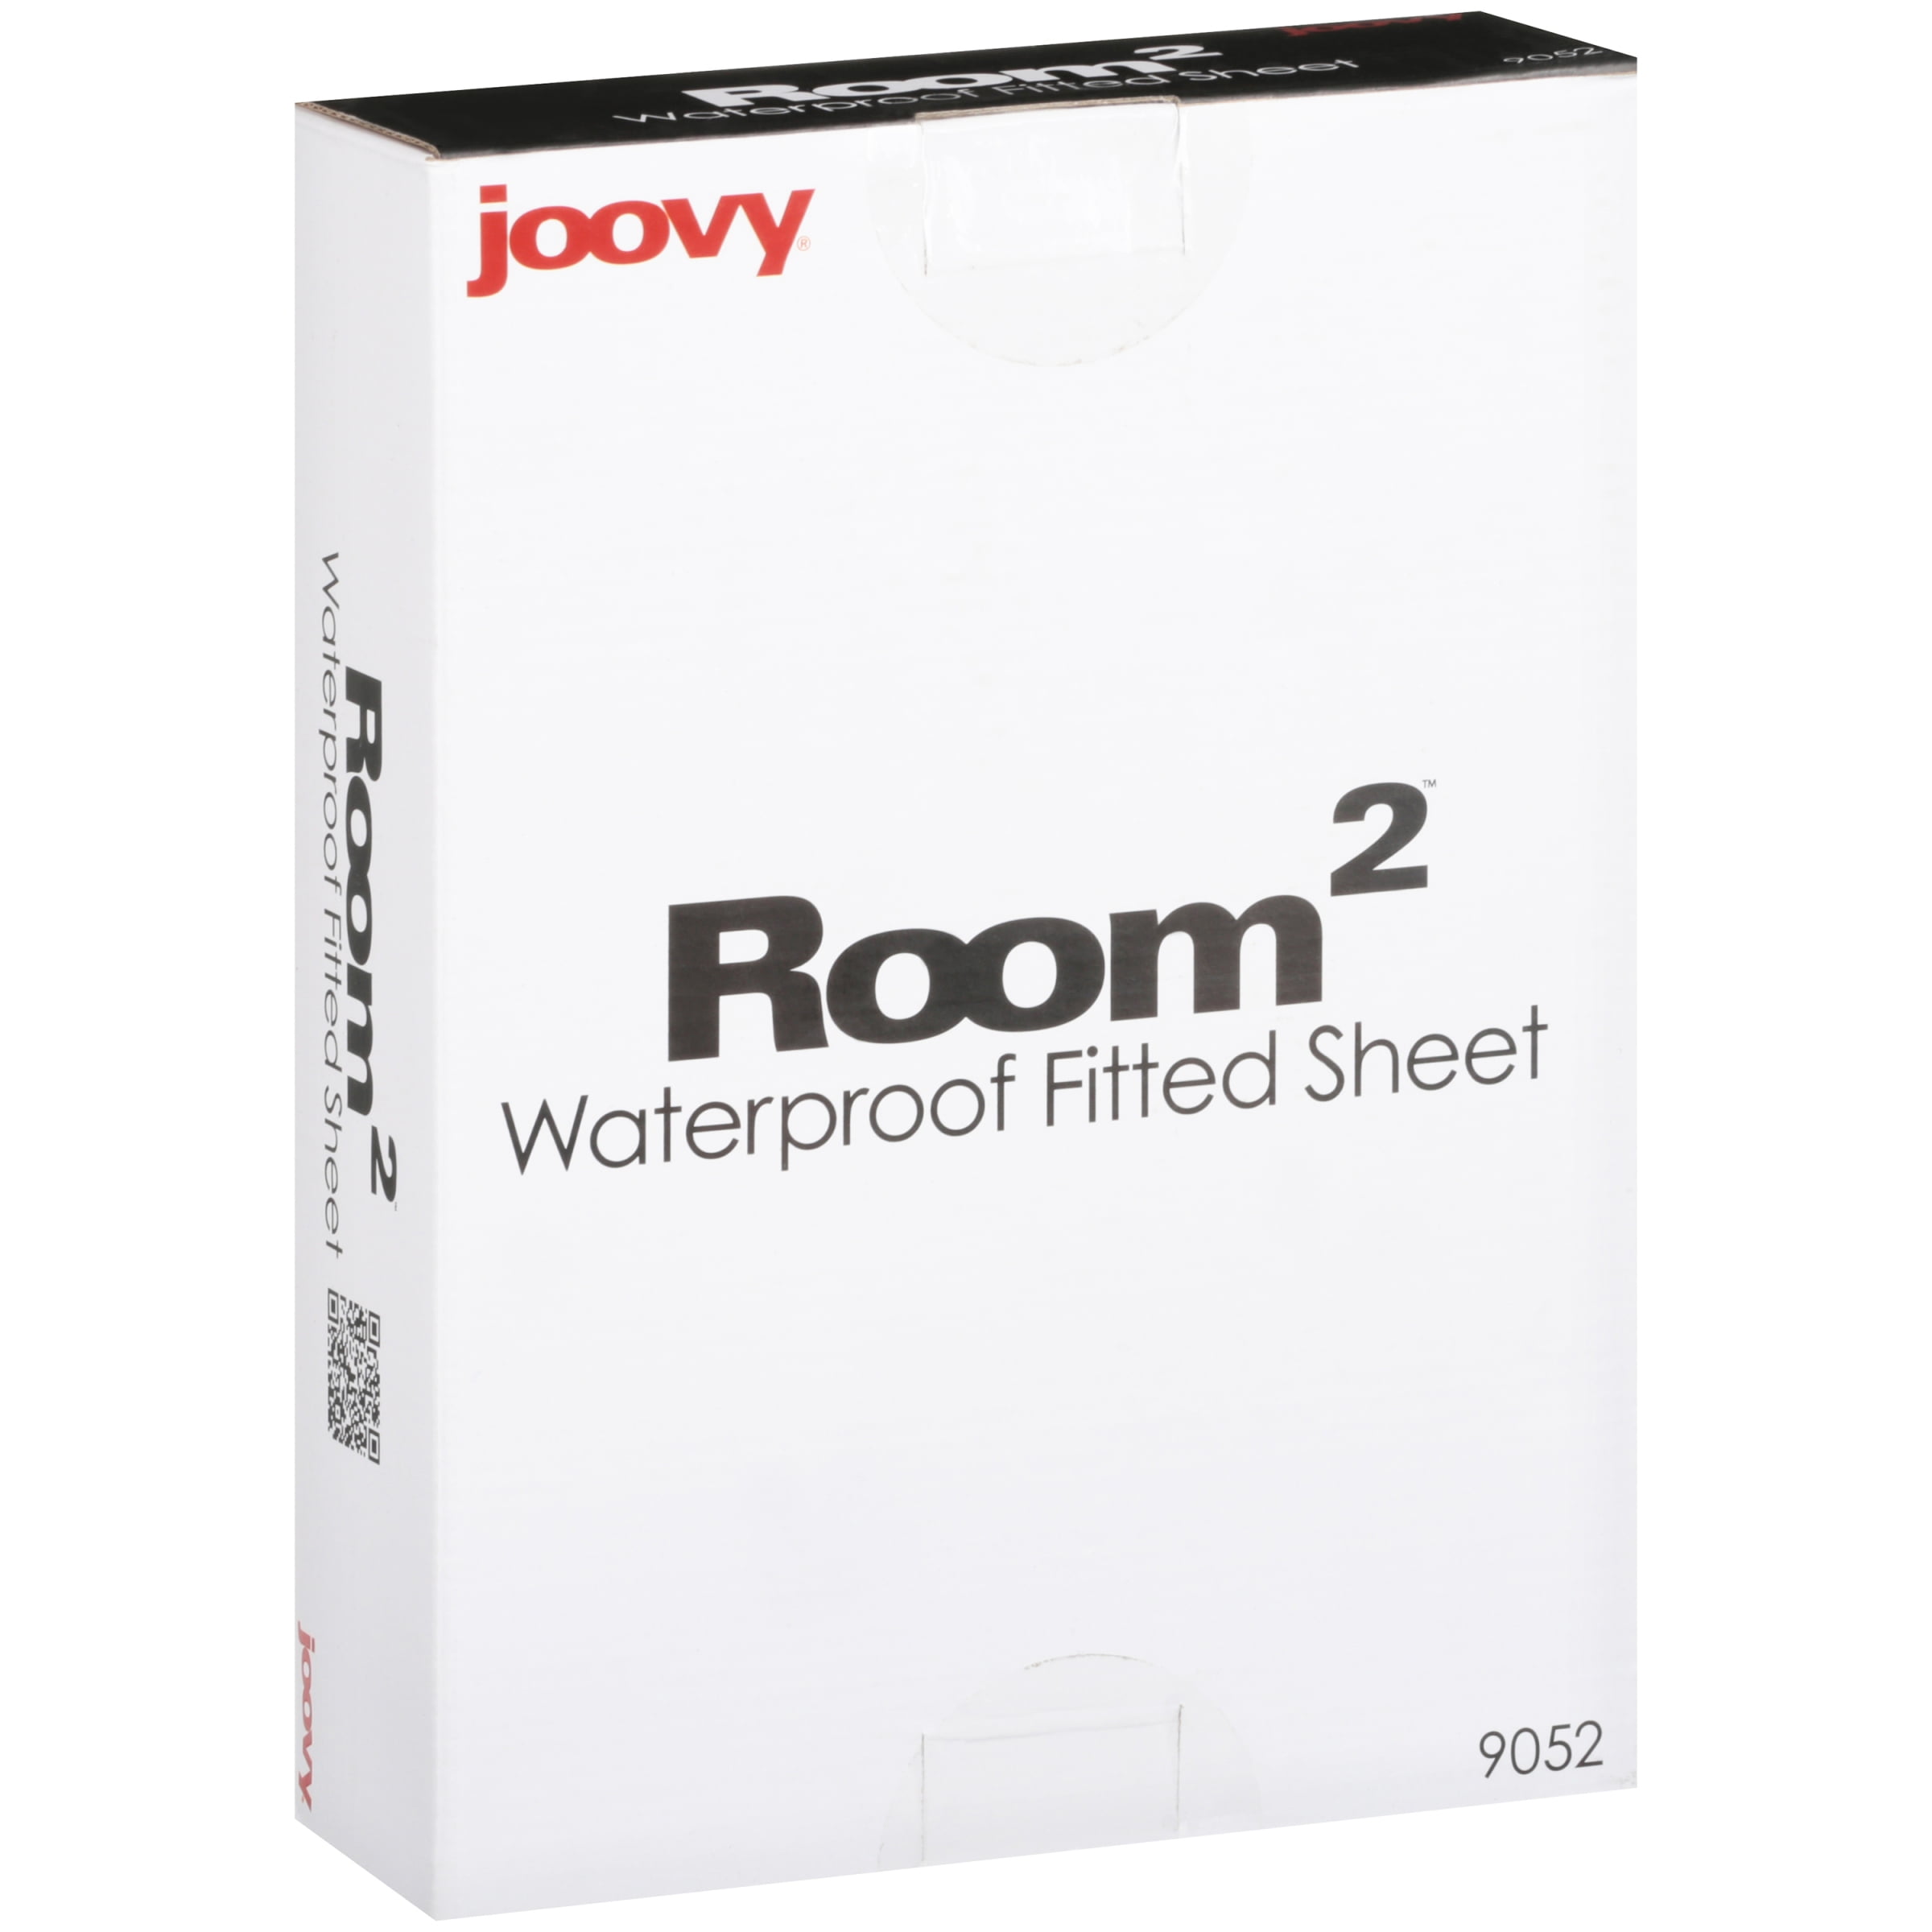 JOOVY Room2 Waterproof Fitted Sheet